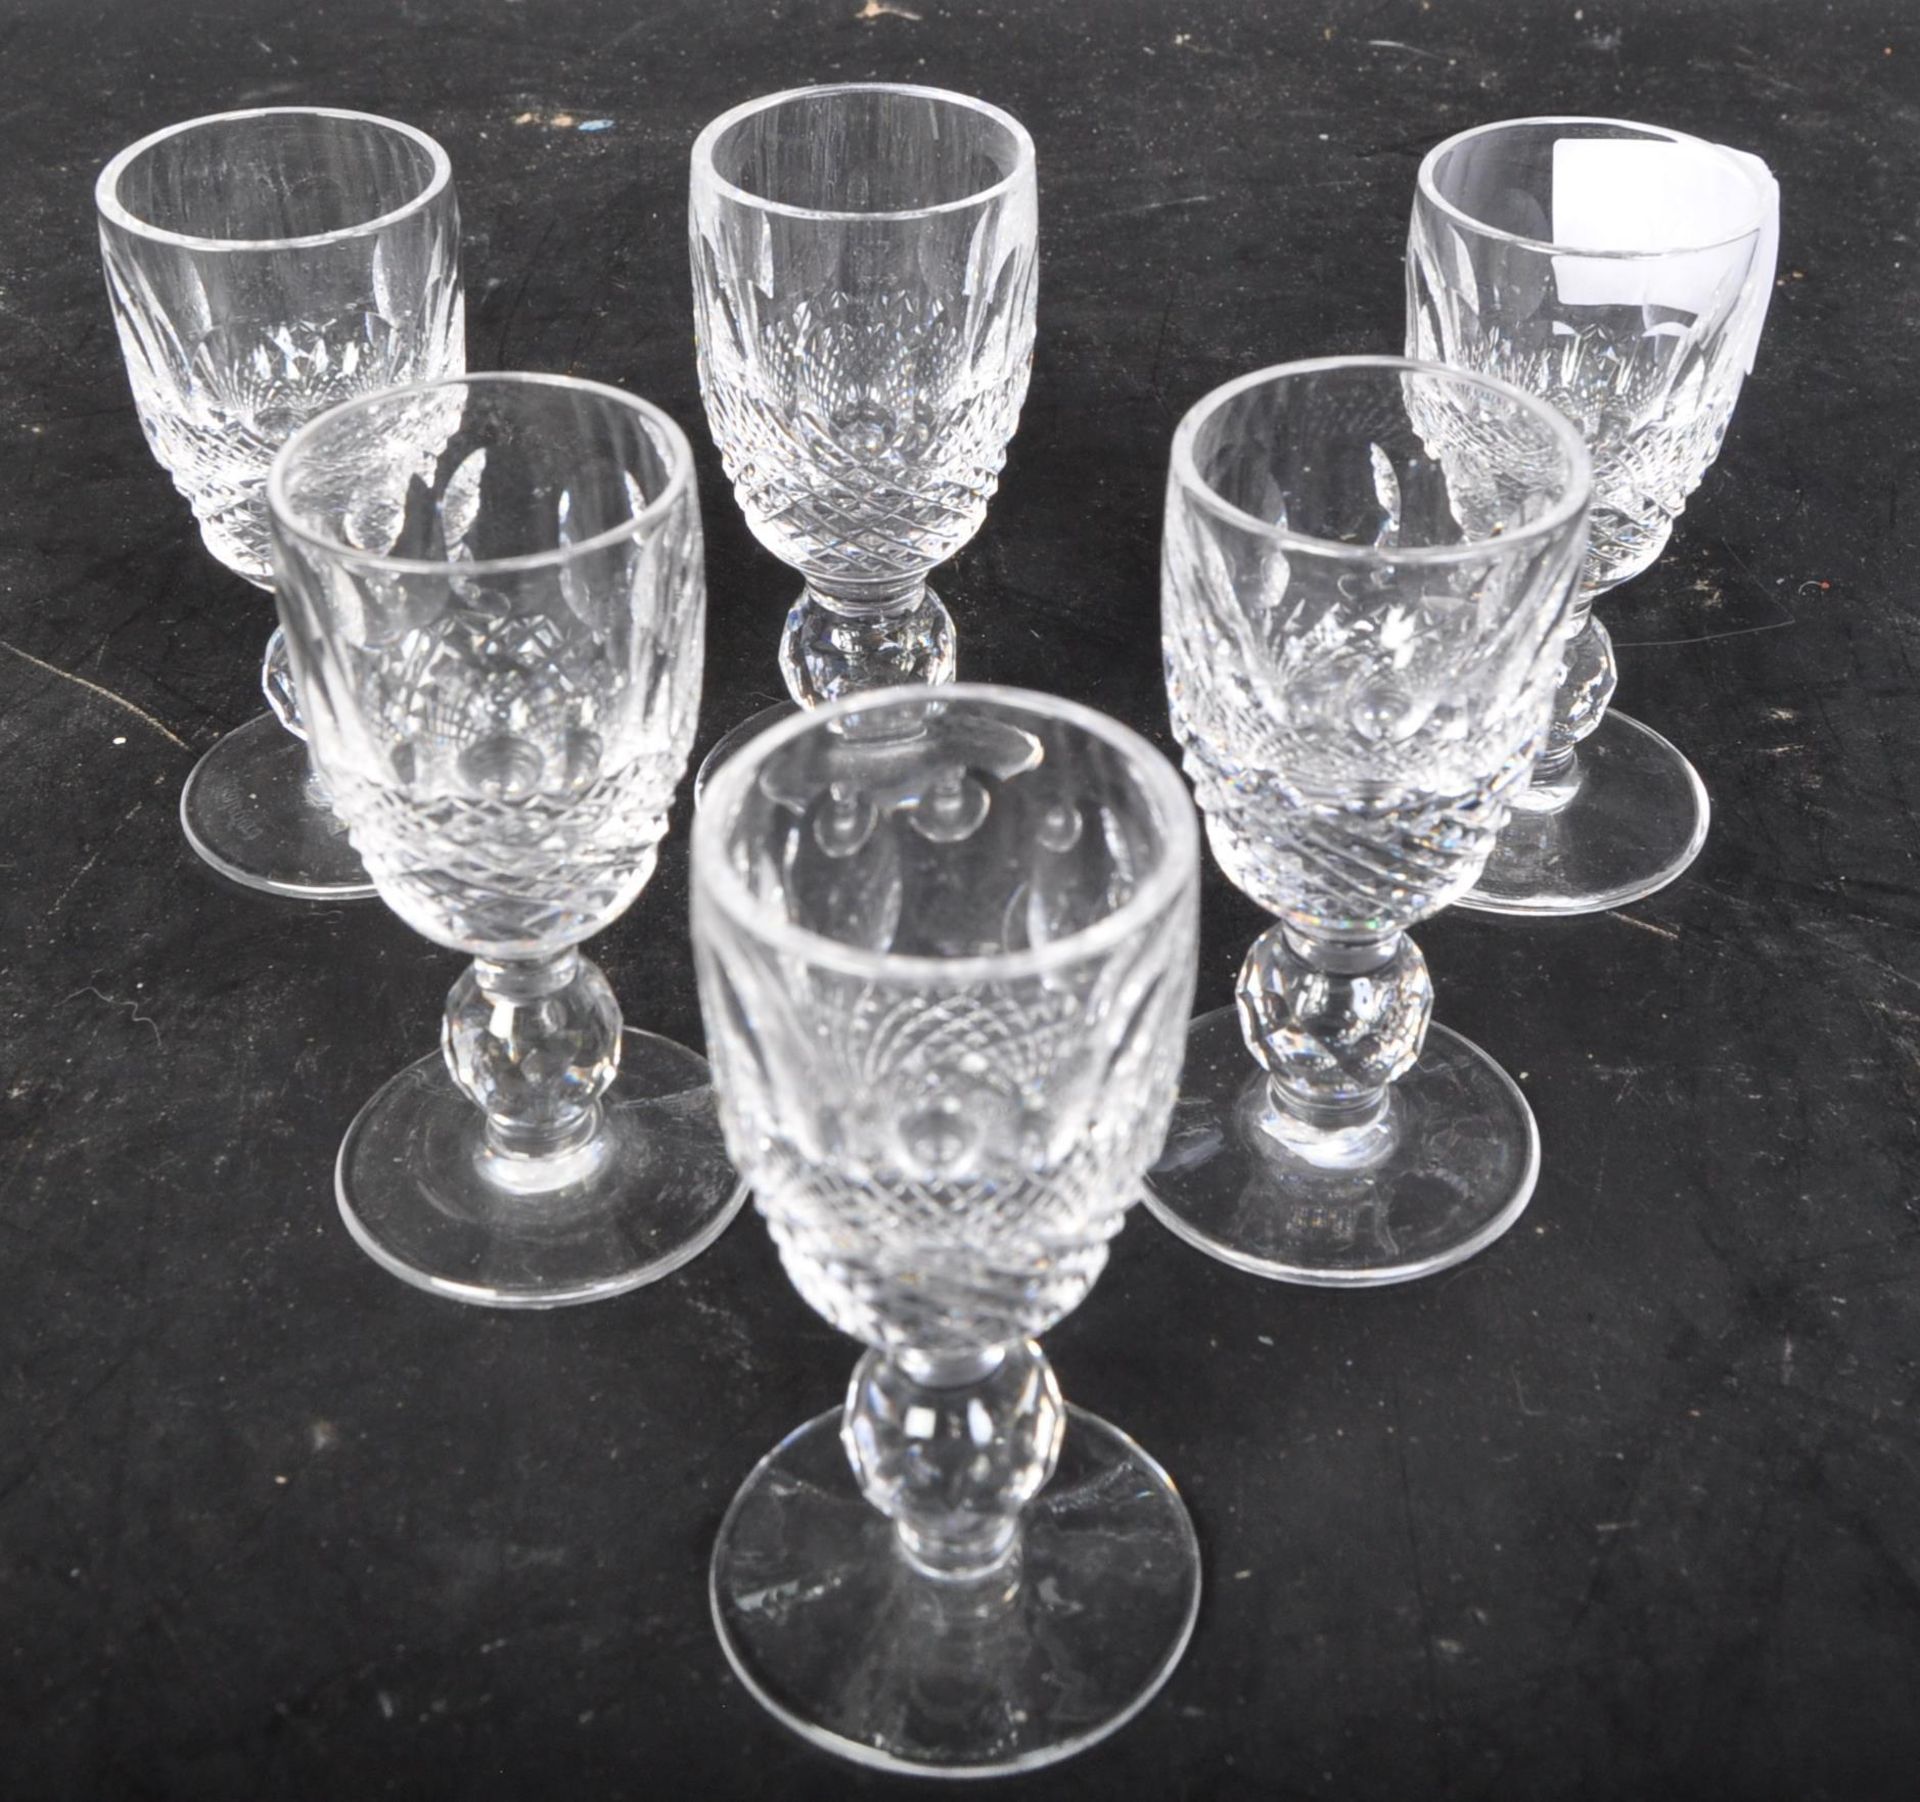 SIX VINTAGE WATERFORD CRYSTAL 'LISMORE' APERITIF GLASSES - Image 4 of 5